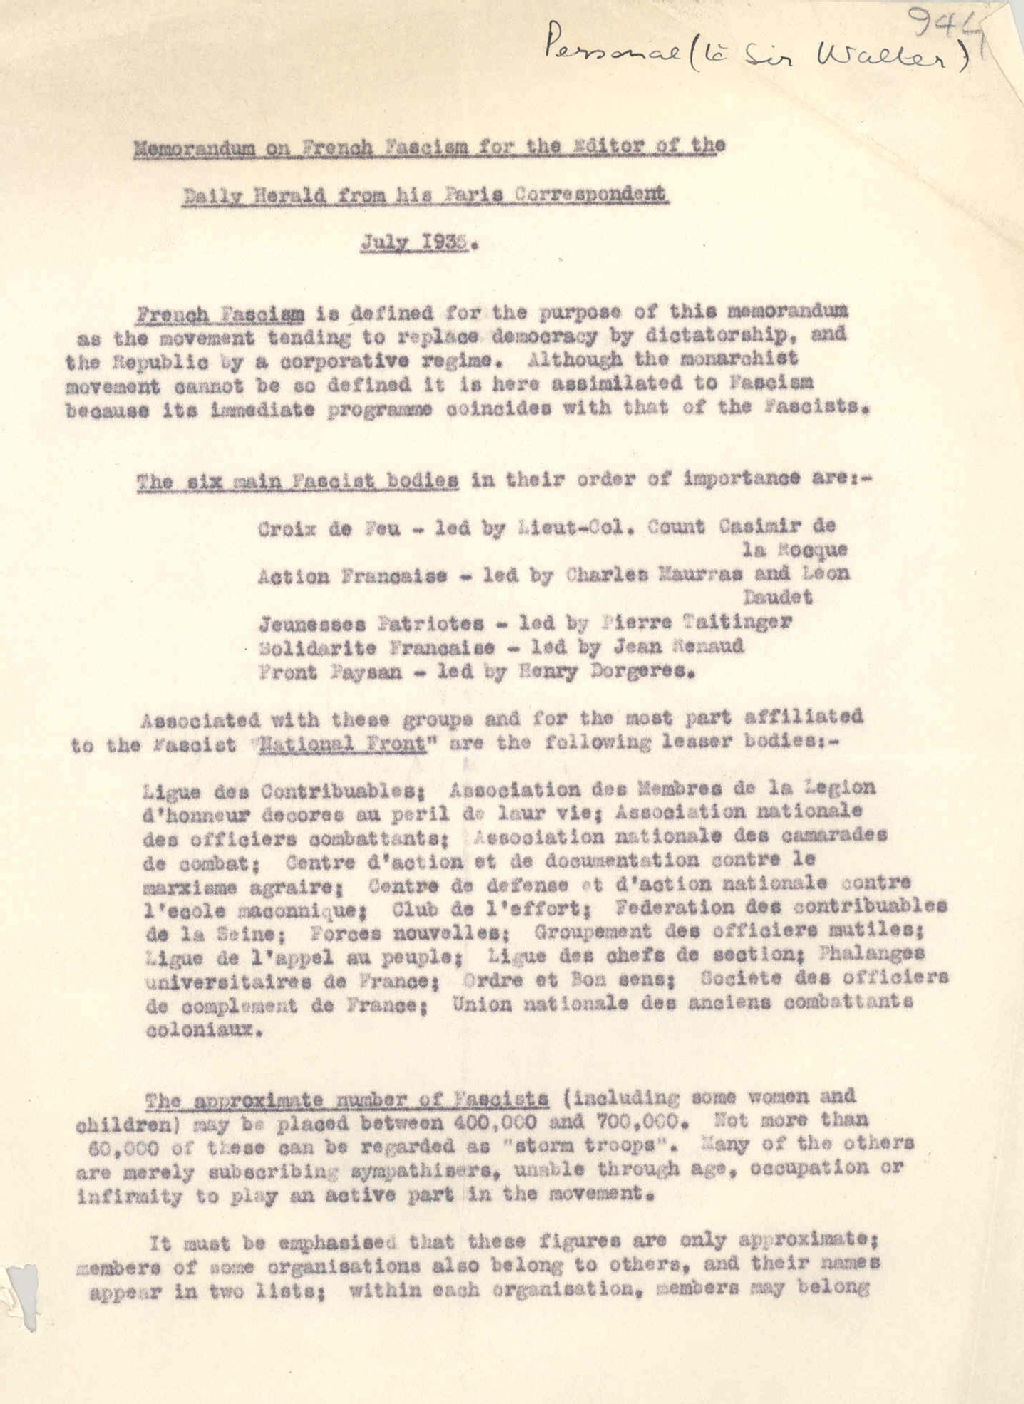 Memorandum on French Fascism, July 1935